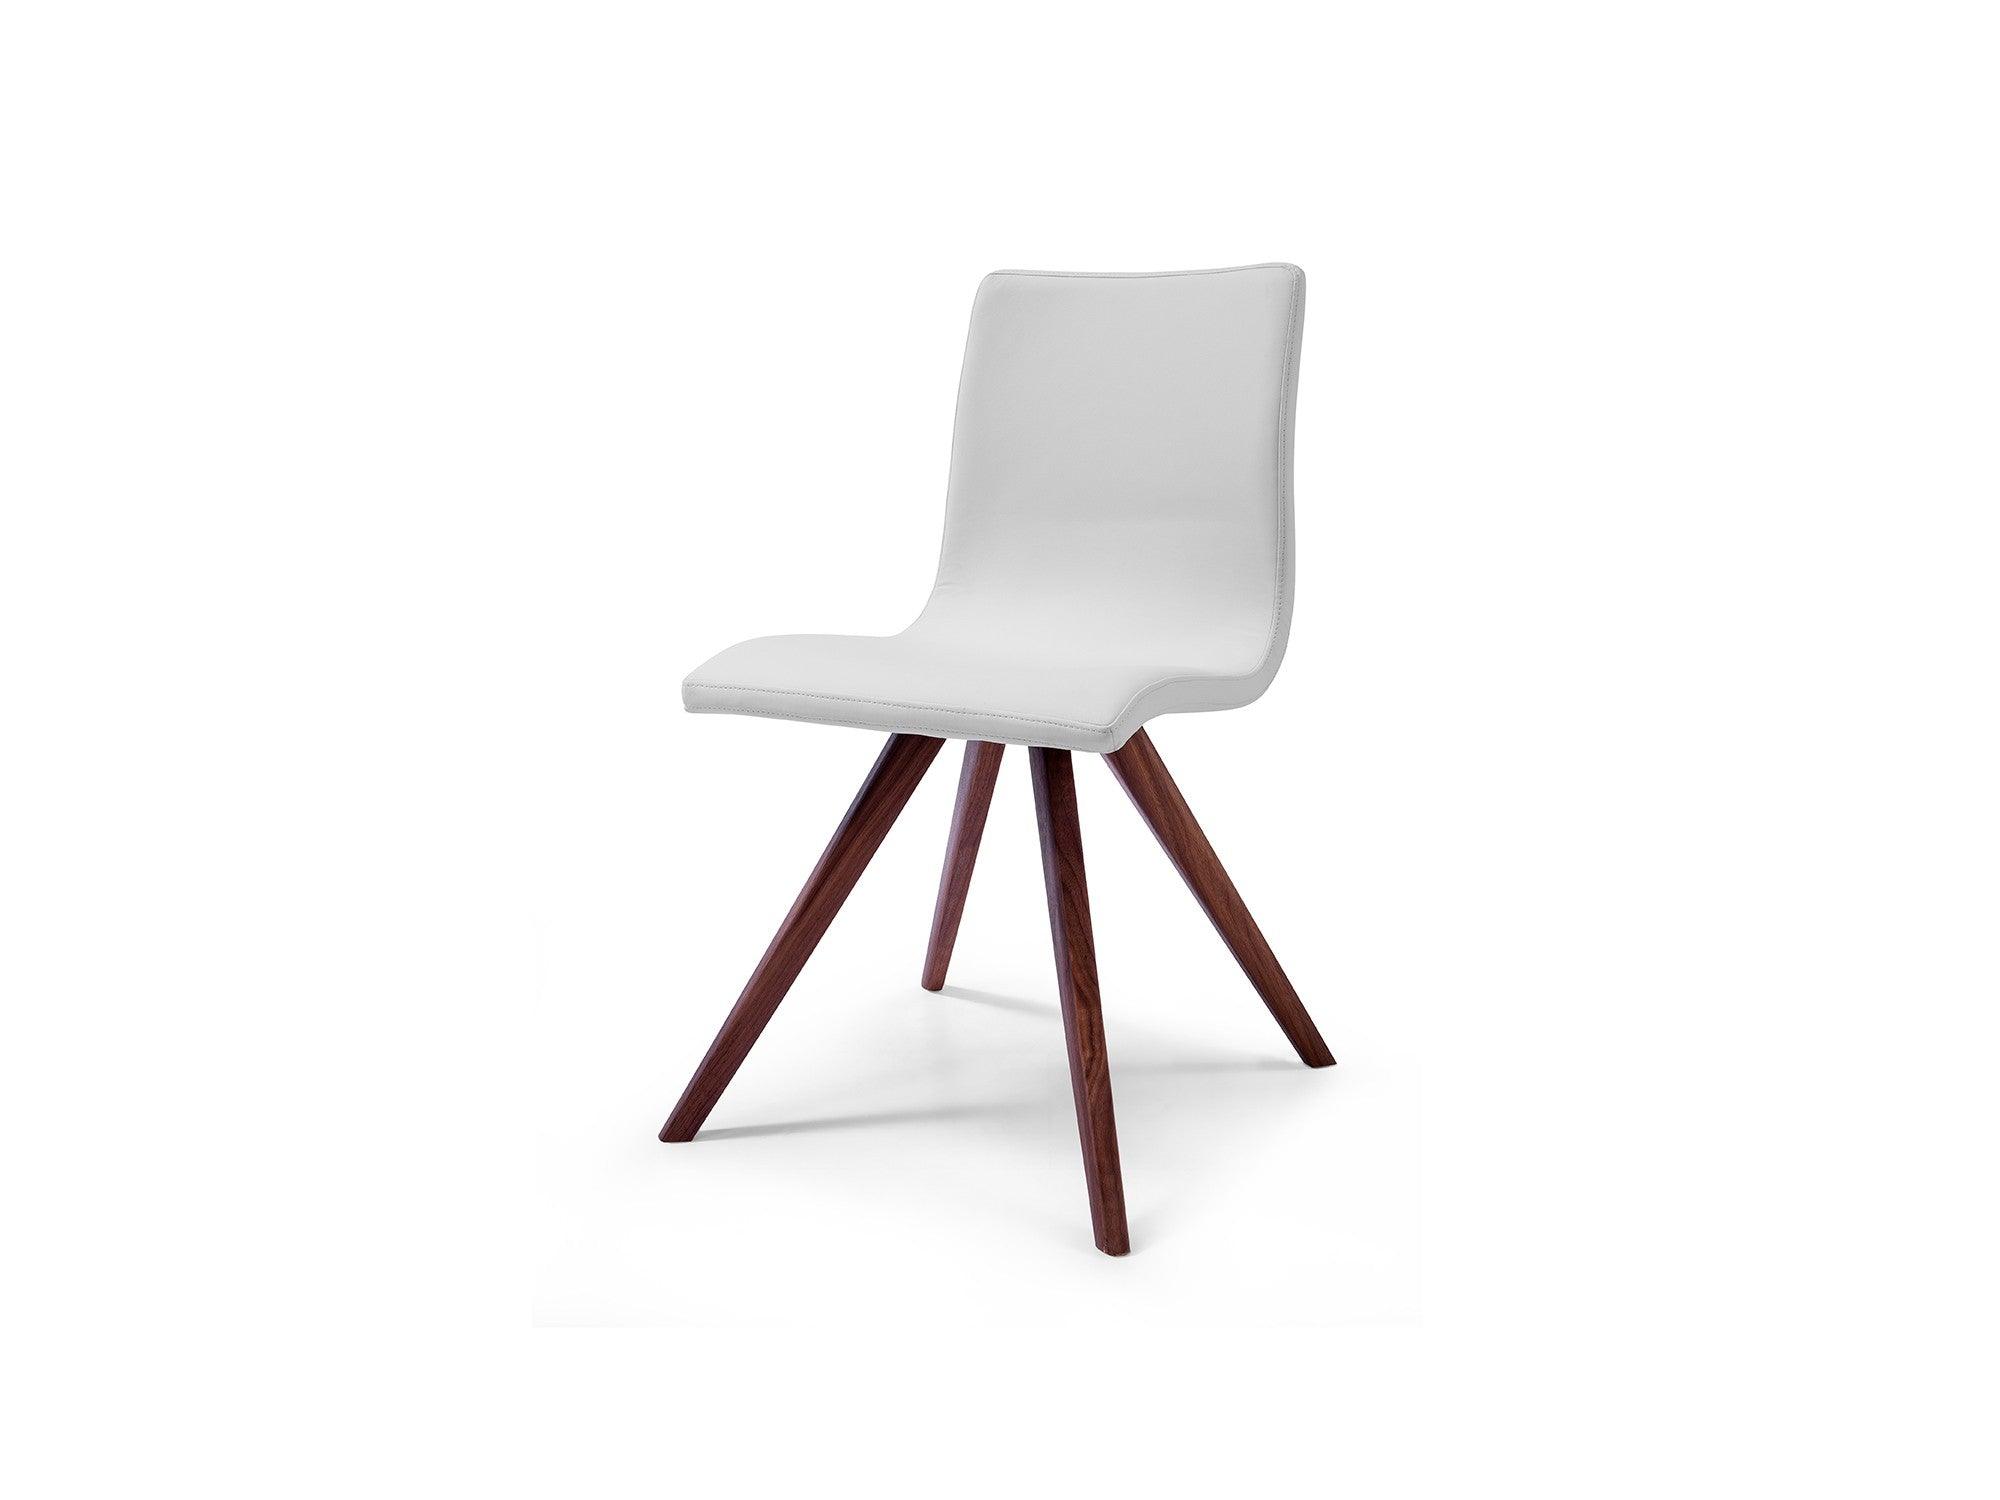 Omega Black Dining Chair - Euro Living Furniture